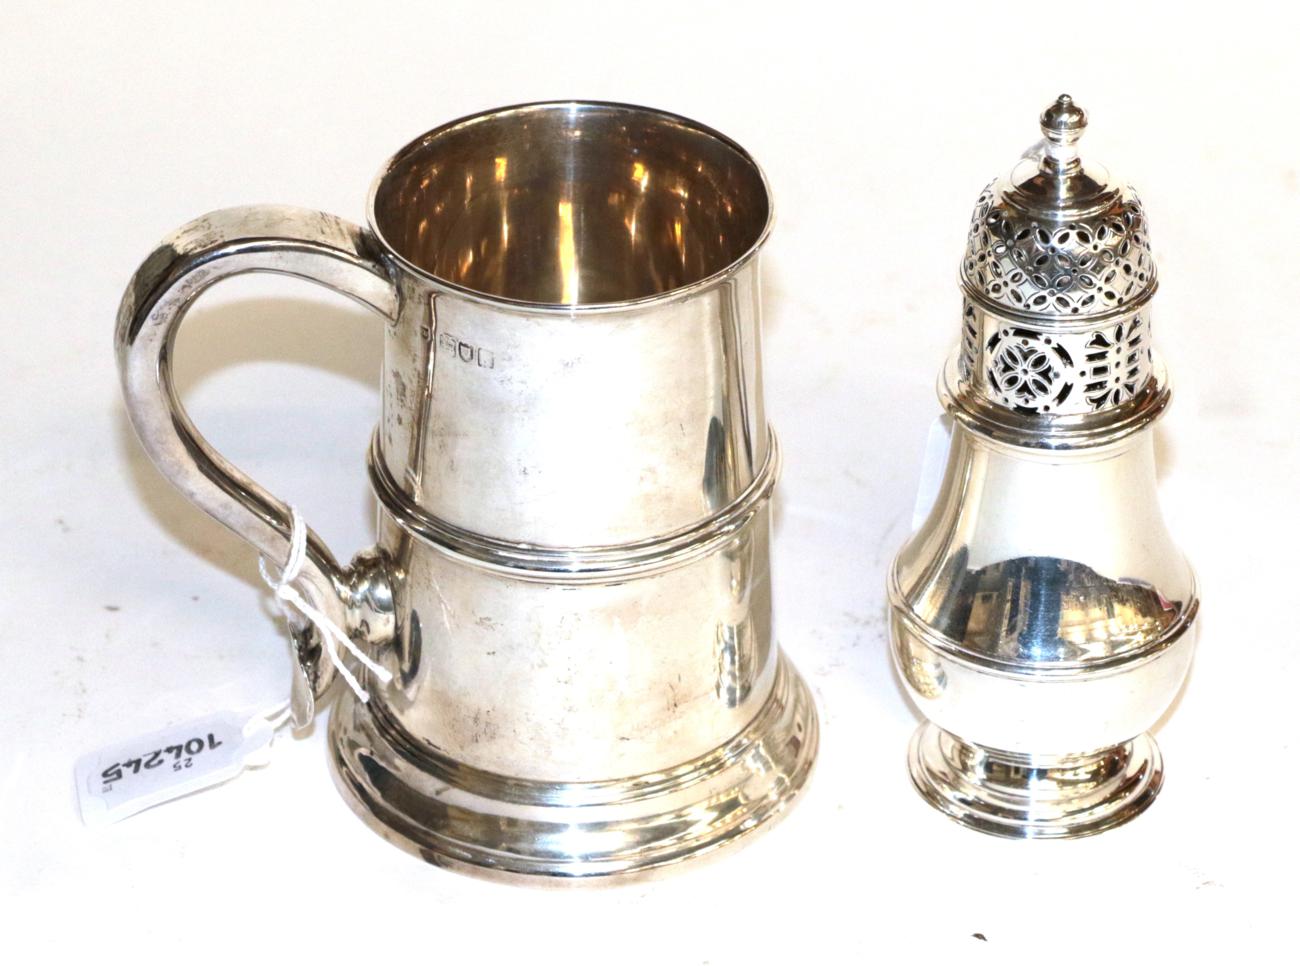 Lot 275 - An Edward VII silver mug and a George V silver caster, the mug by Thomas Bradbury and Sons, London